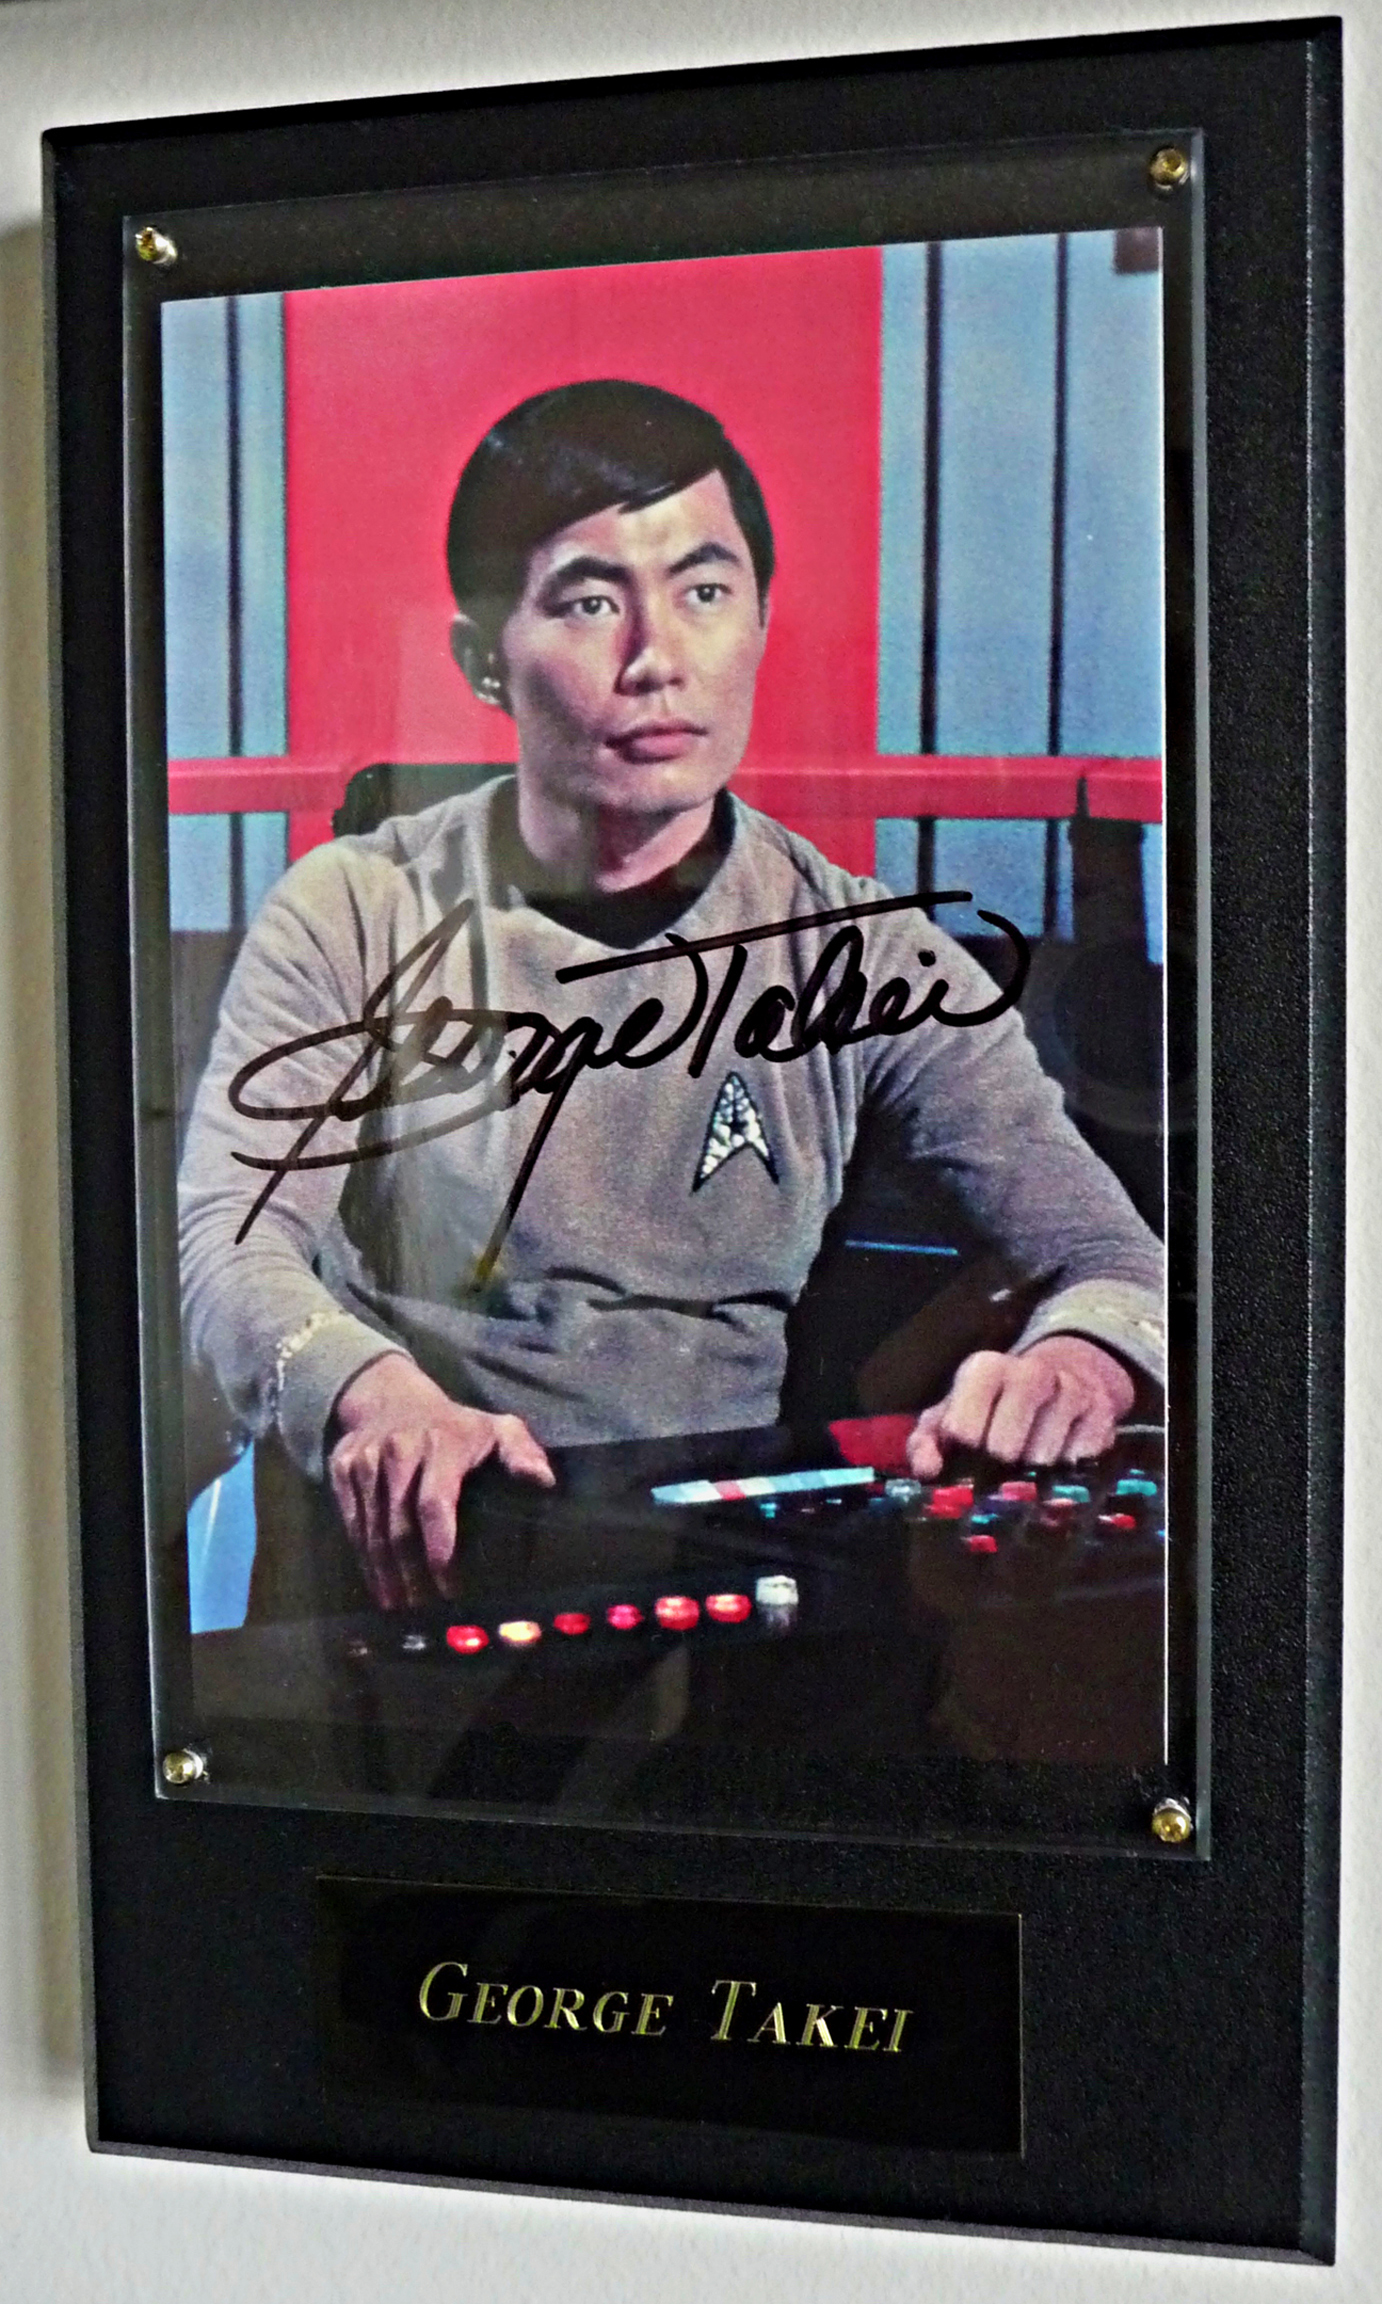 George Takei Autograph.jpg